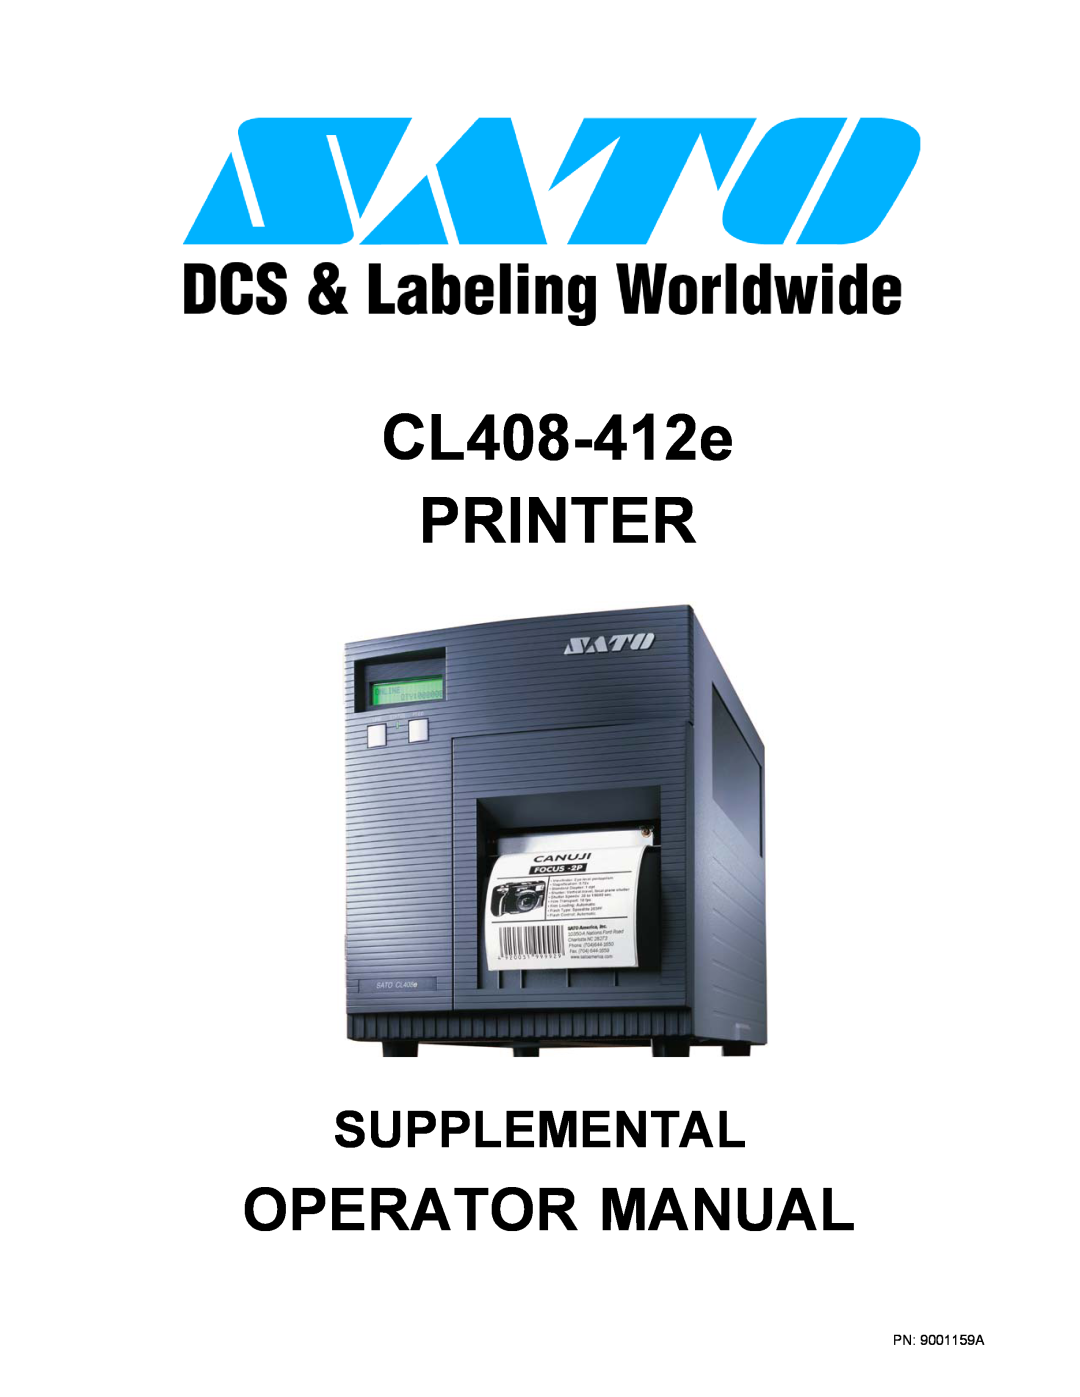 SATO manual CL408-412e PRINTER, Operator Manual, Supplemental 